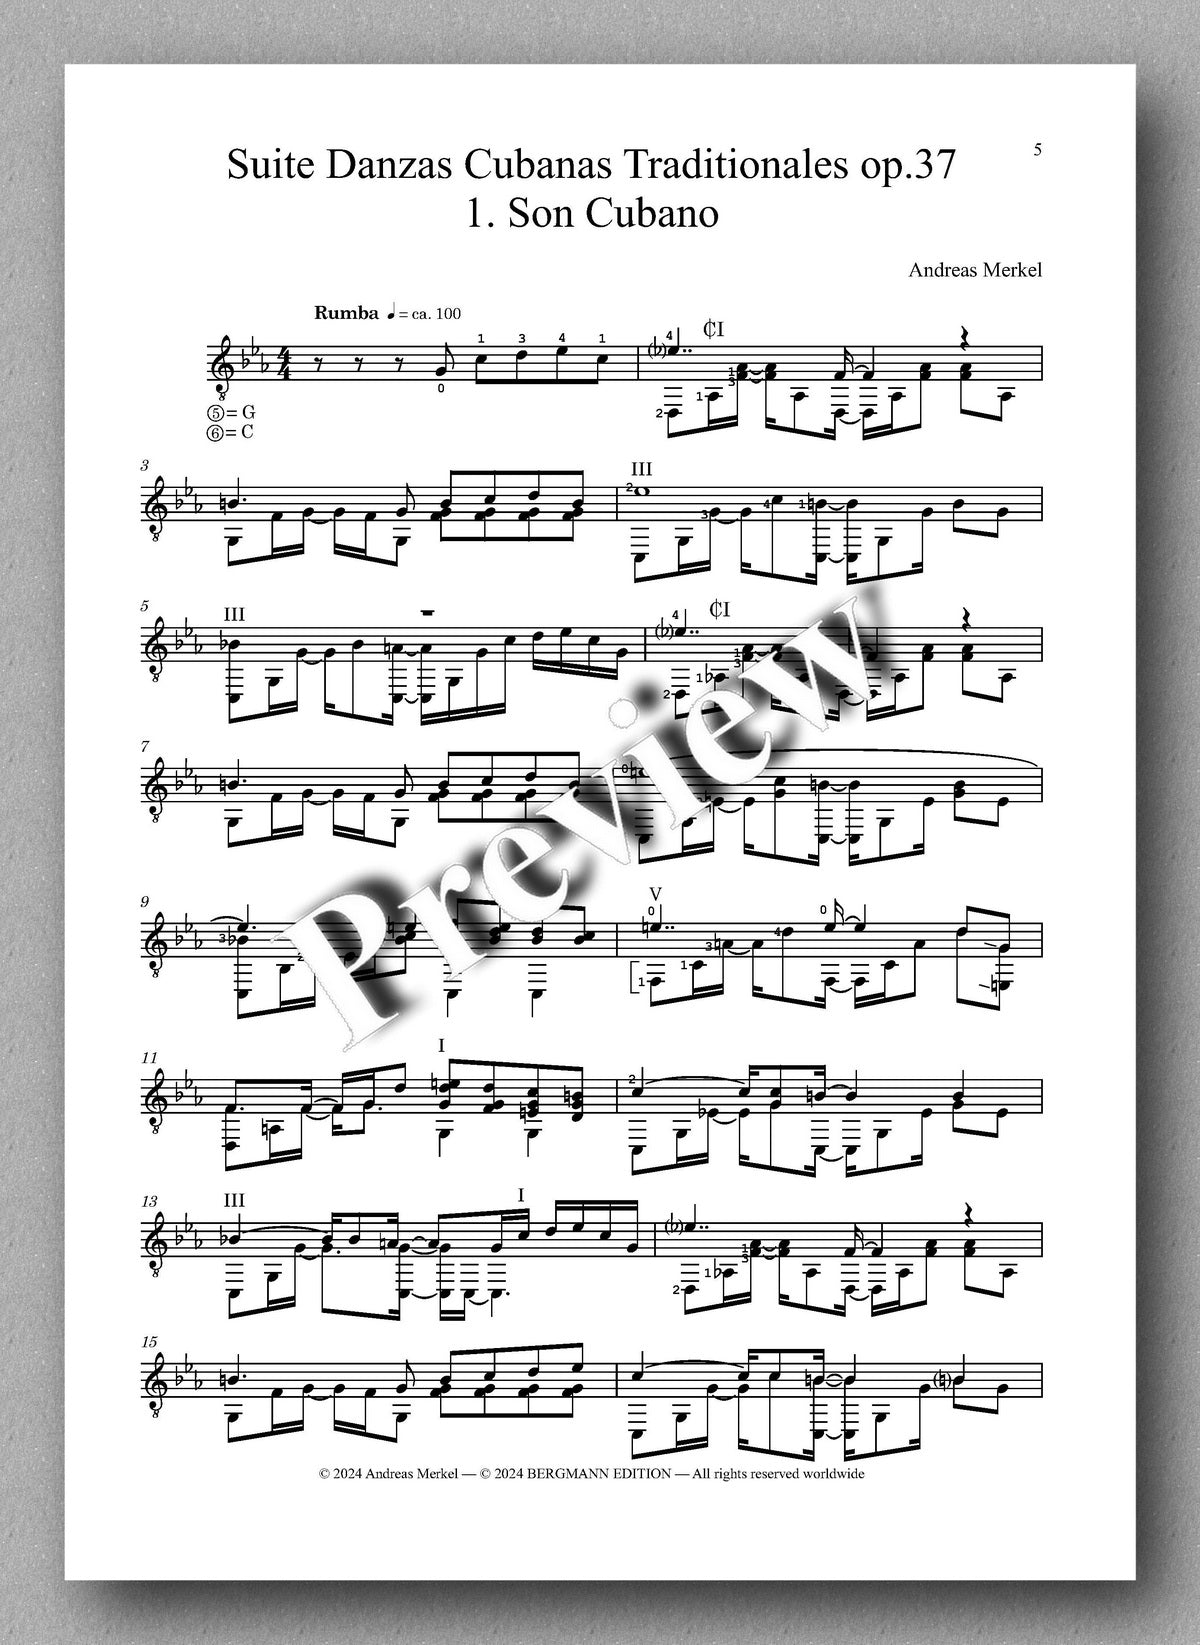 Andreas Merkel, Suite Danzas Cubanas Traditionales, op. 37 - preview of the music score 1